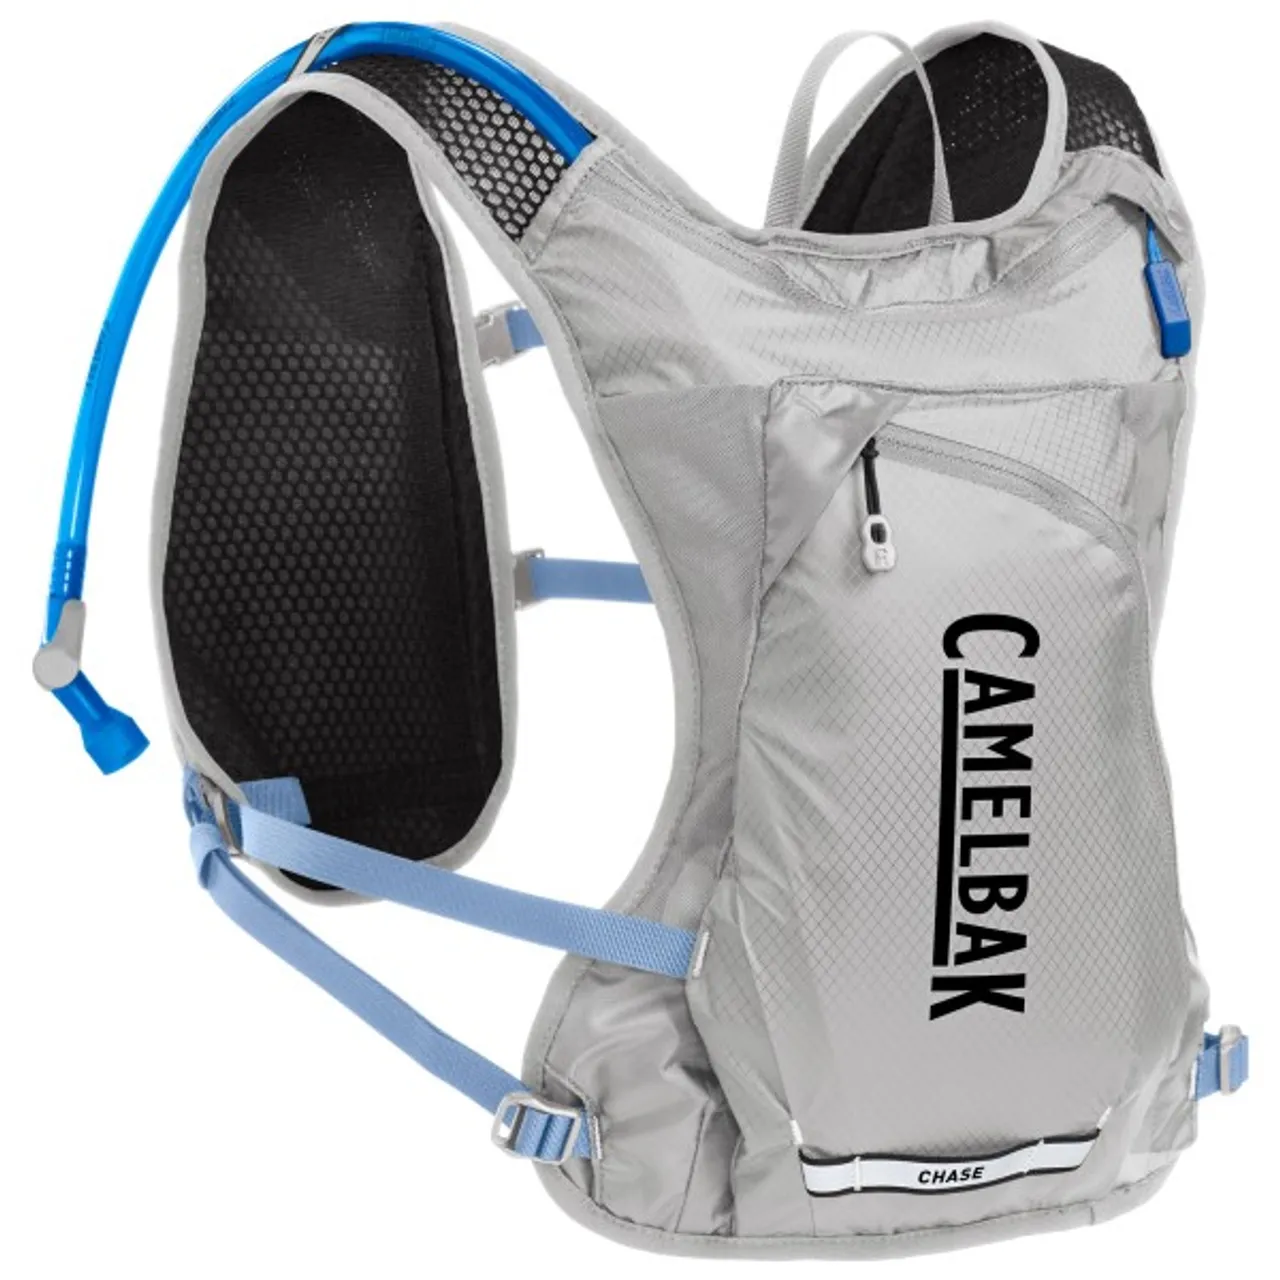 Camelbak - Women's Chase Race 4 - Cycling backpack size 2,5 l + 1,5 l Reservoir, grey